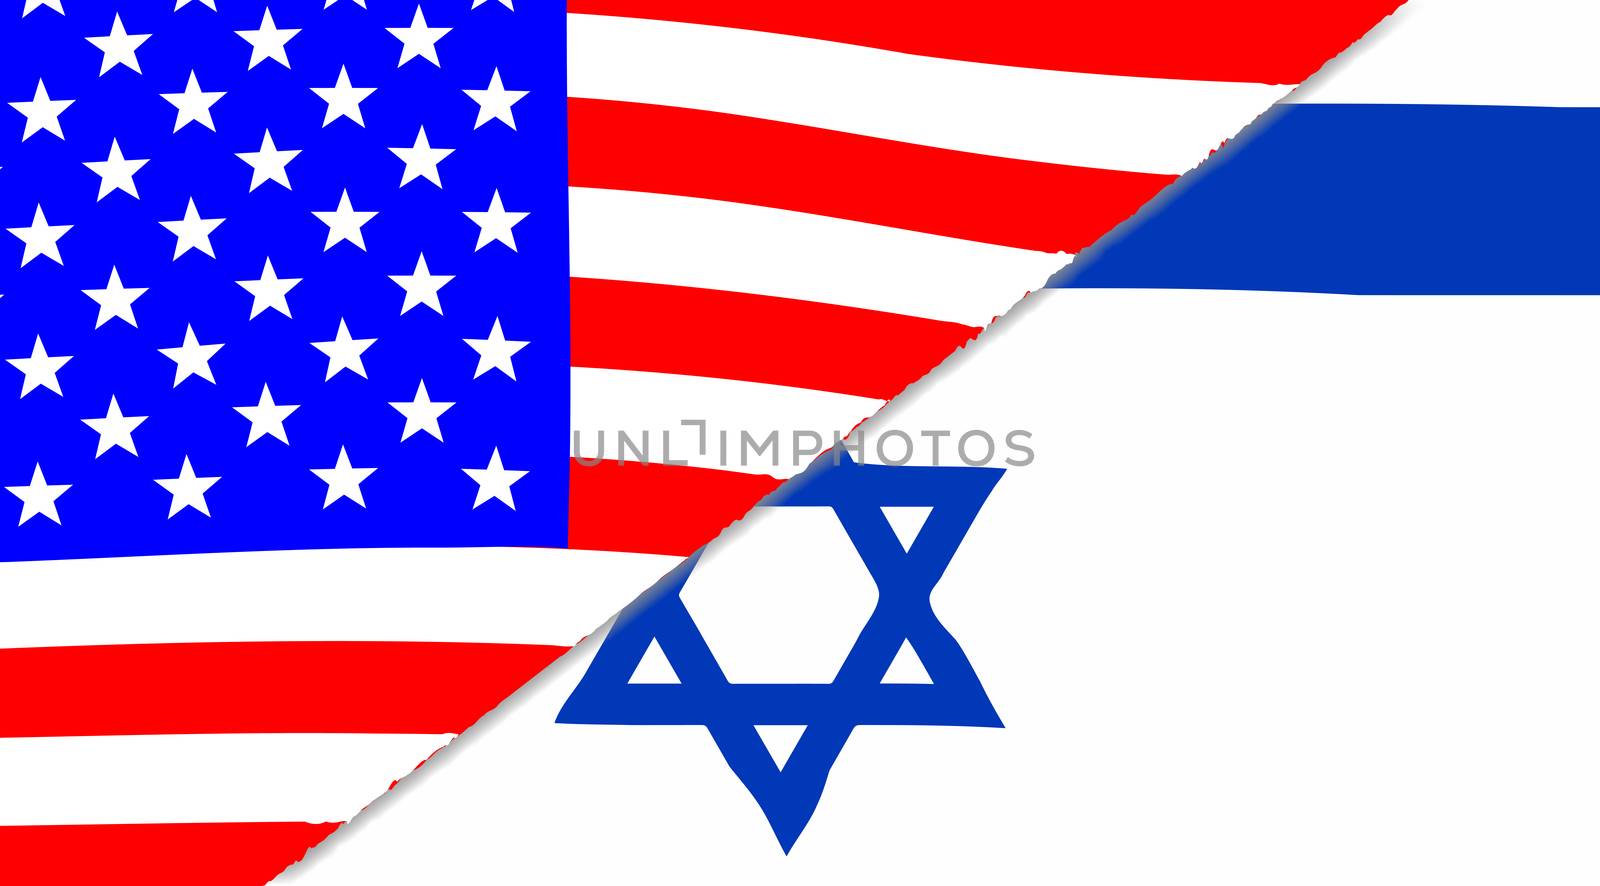 USA and Jewish Flags by Bigalbaloo